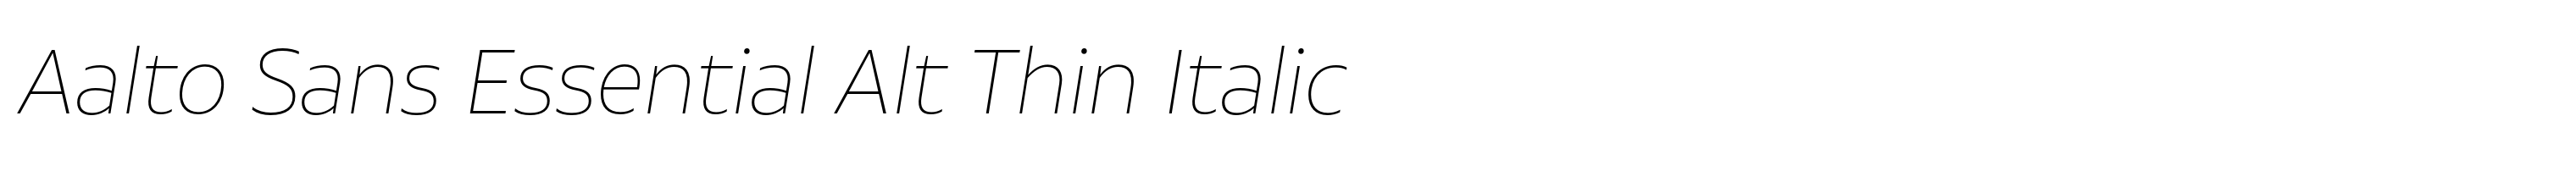 Aalto Sans Essential Alt Thin Italic